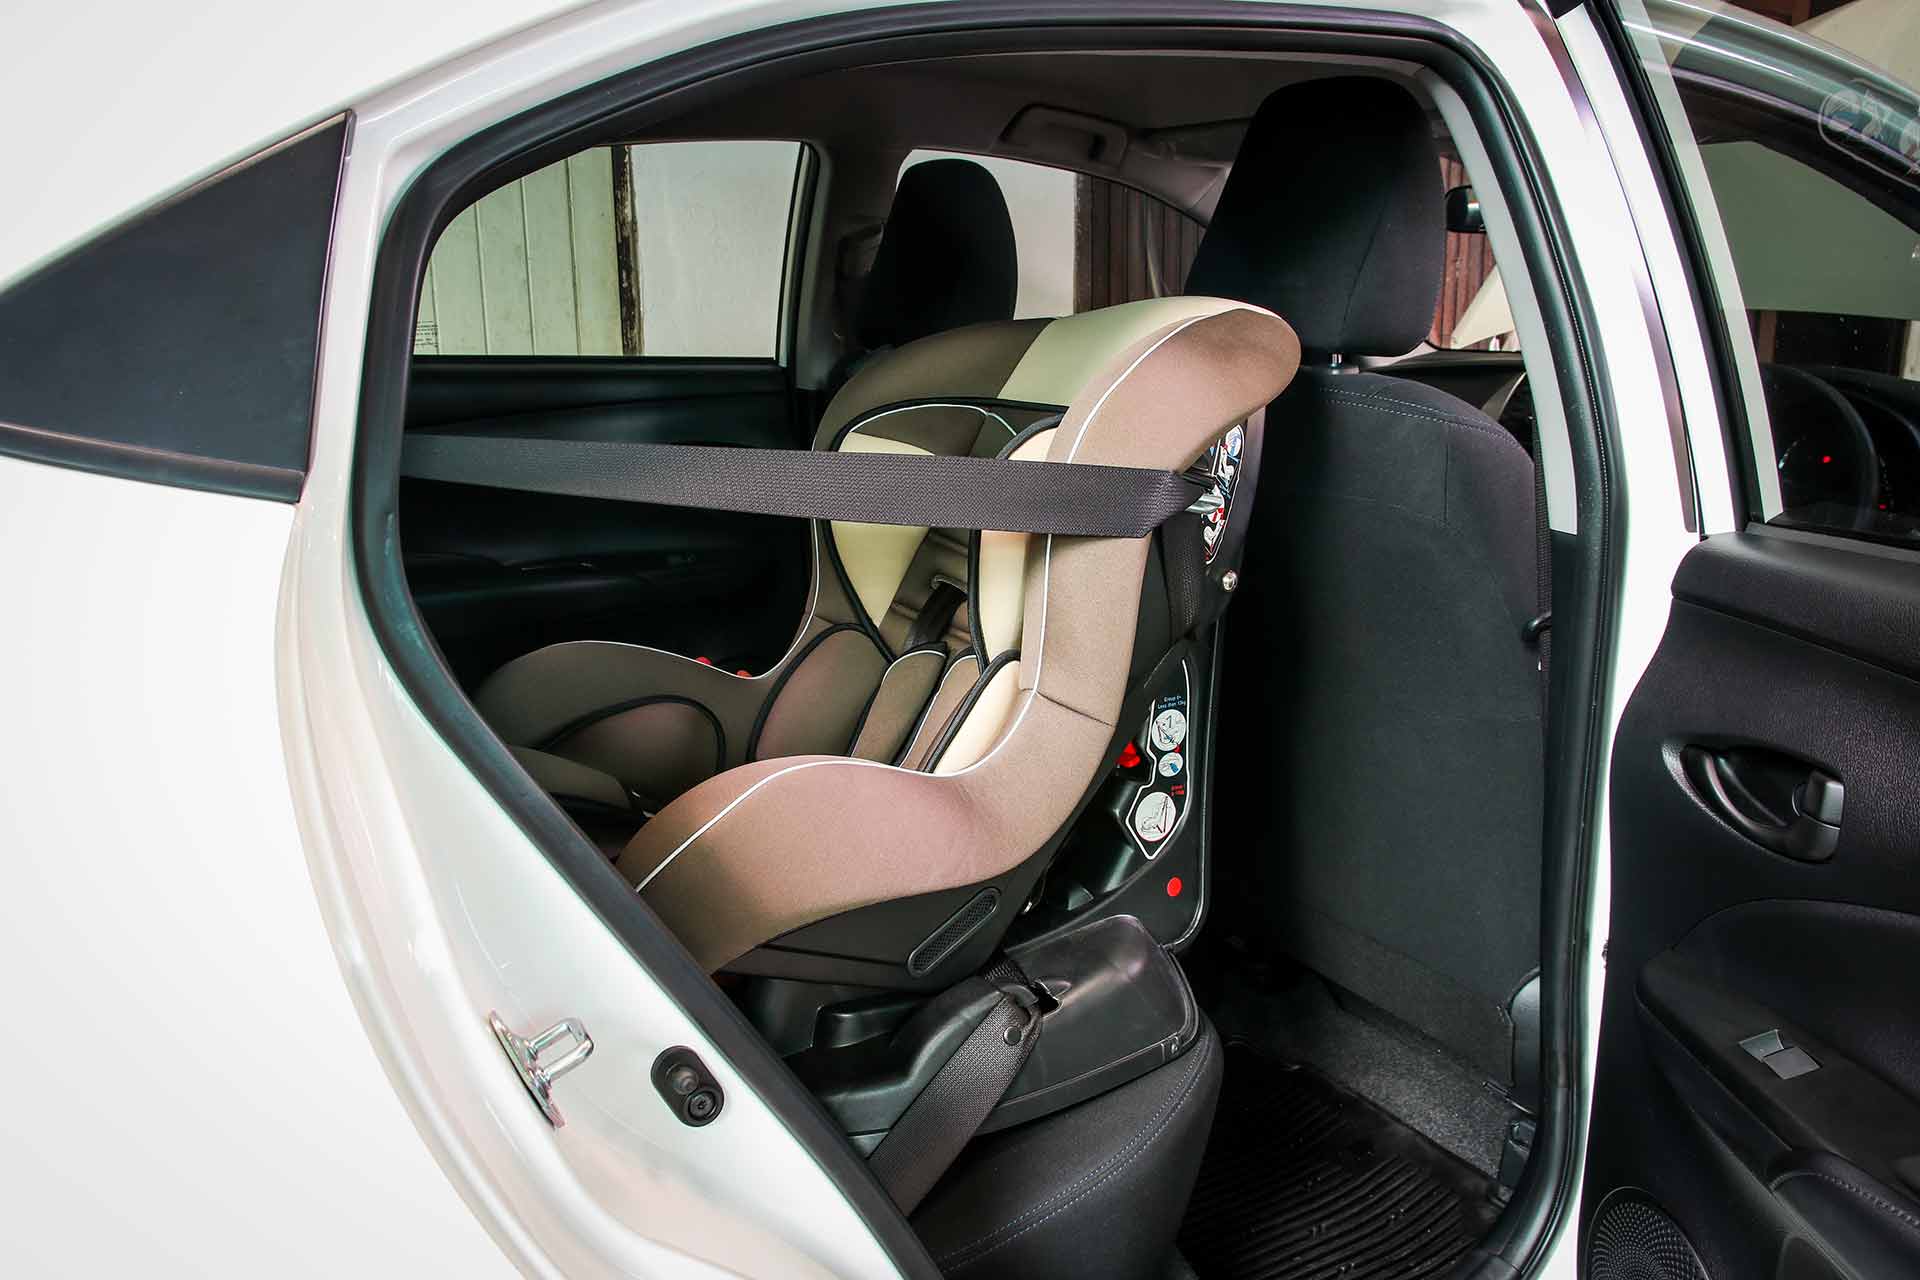 Installing-rear-car-seat